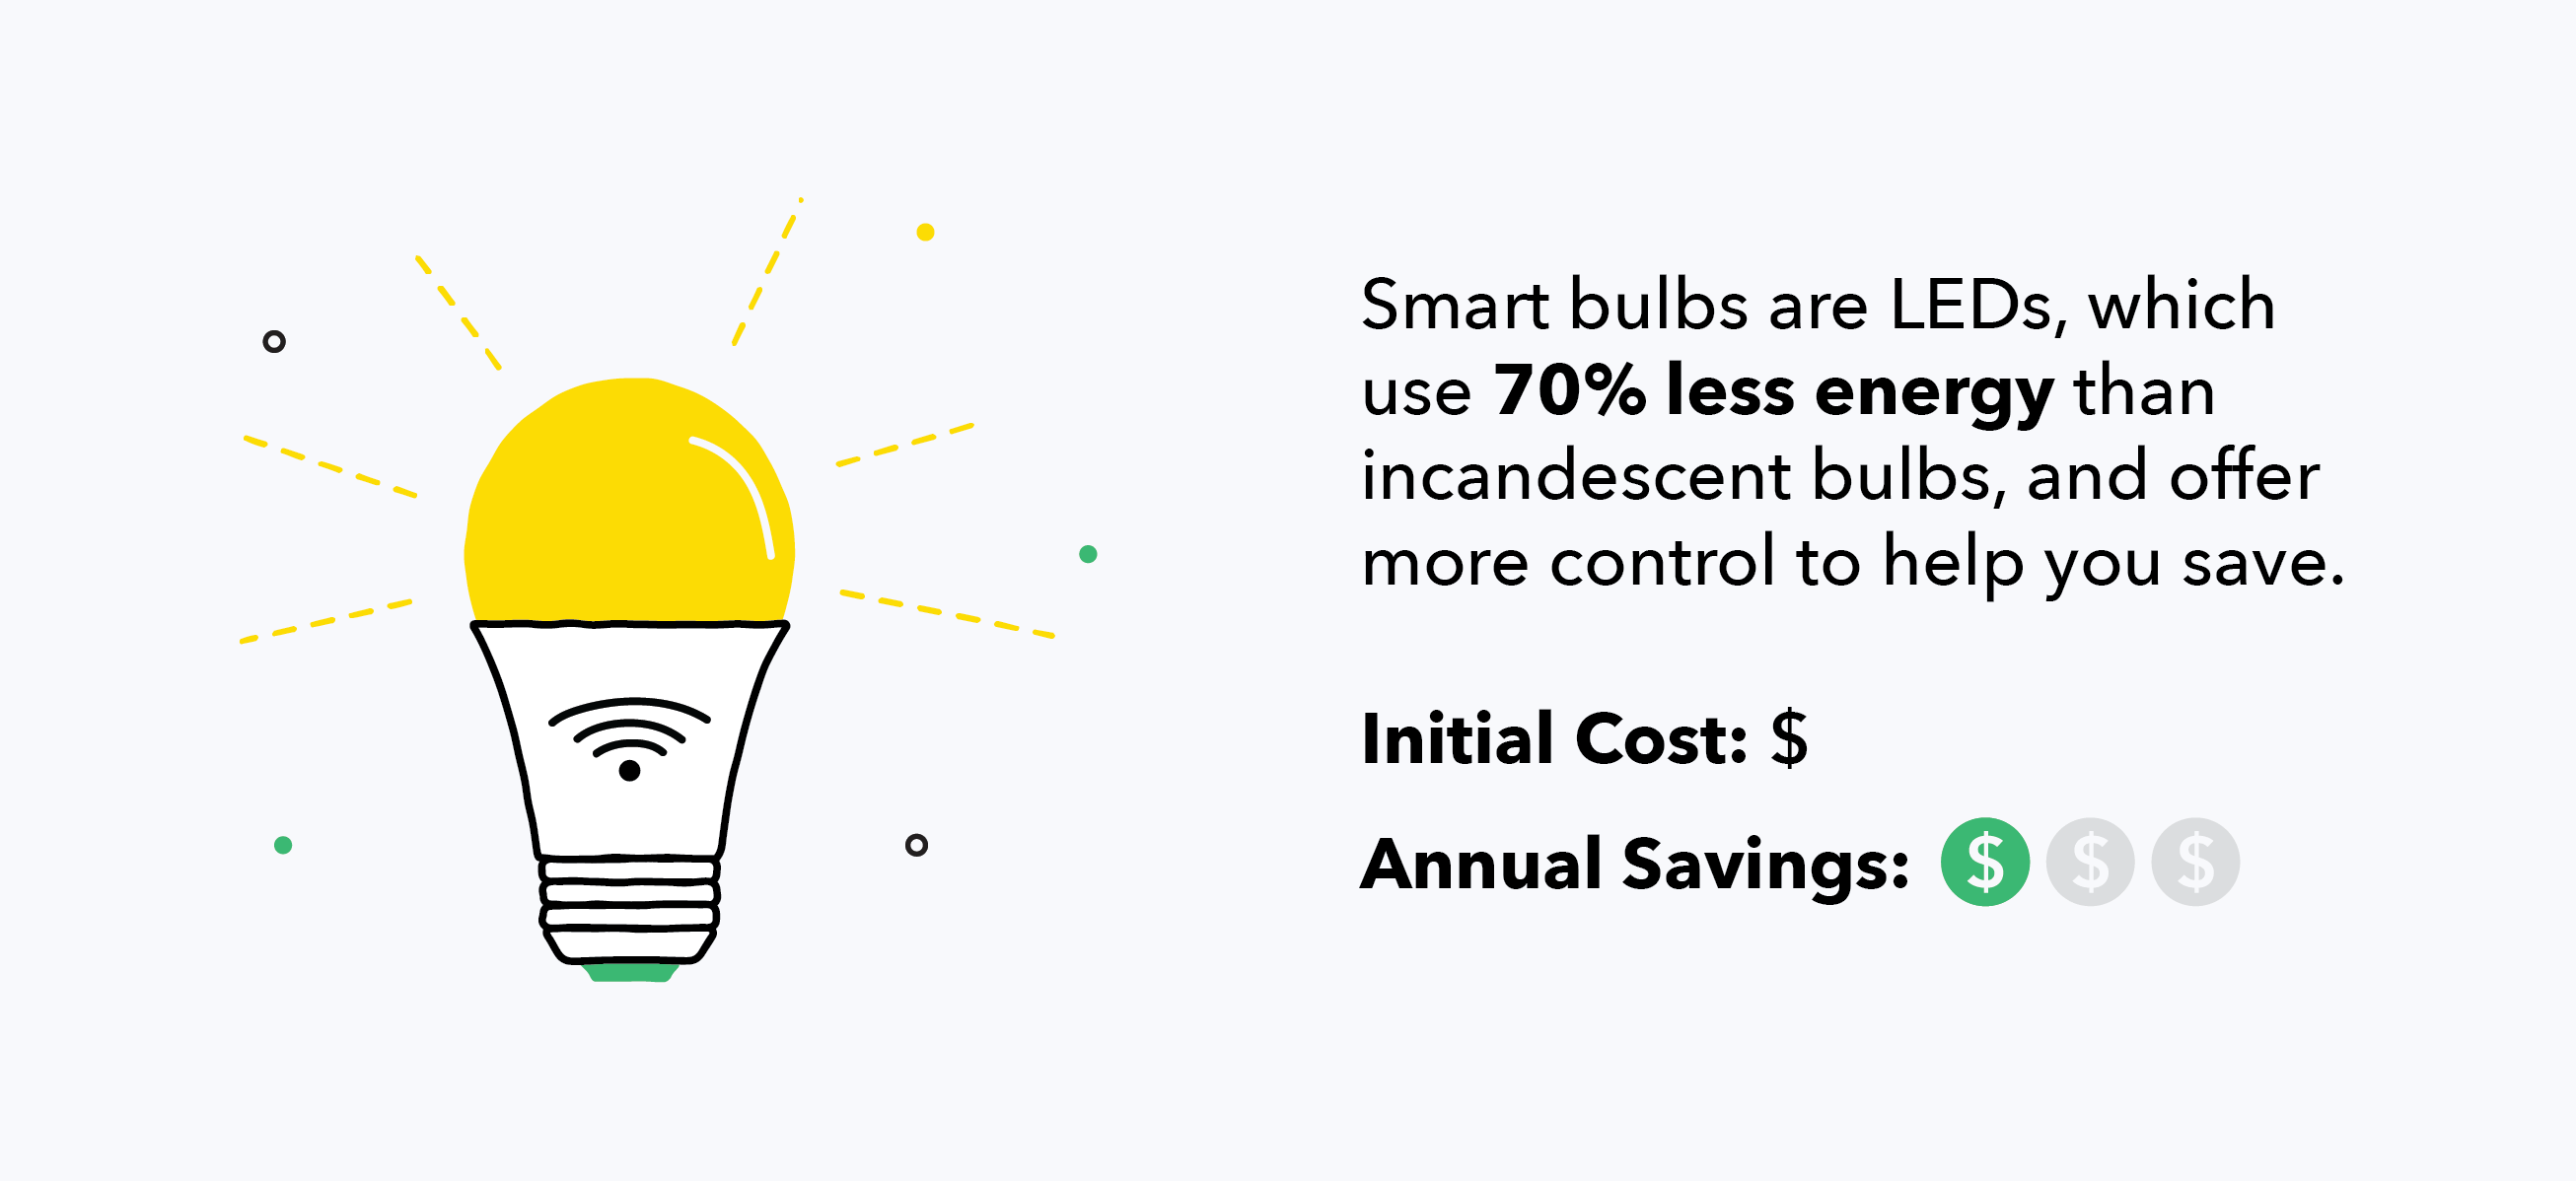 LED bulbs use 70% less energy than incandescent